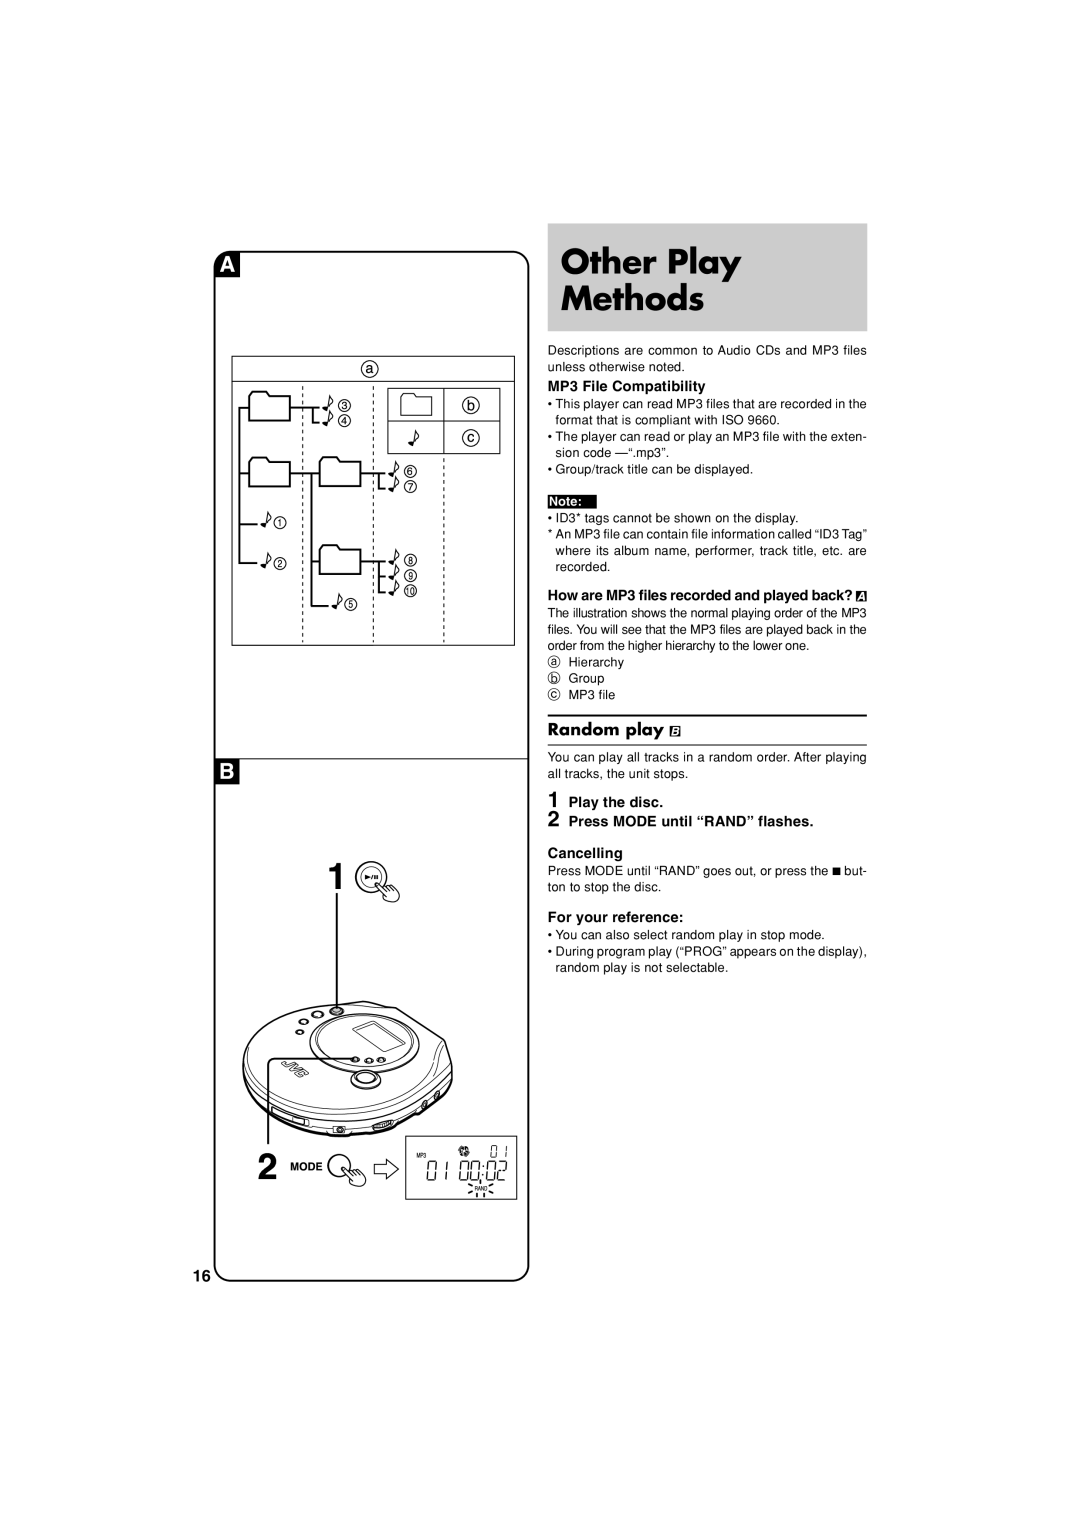 JVC XL-PM20SL manual Other Play, Methods, Random play, Mode 